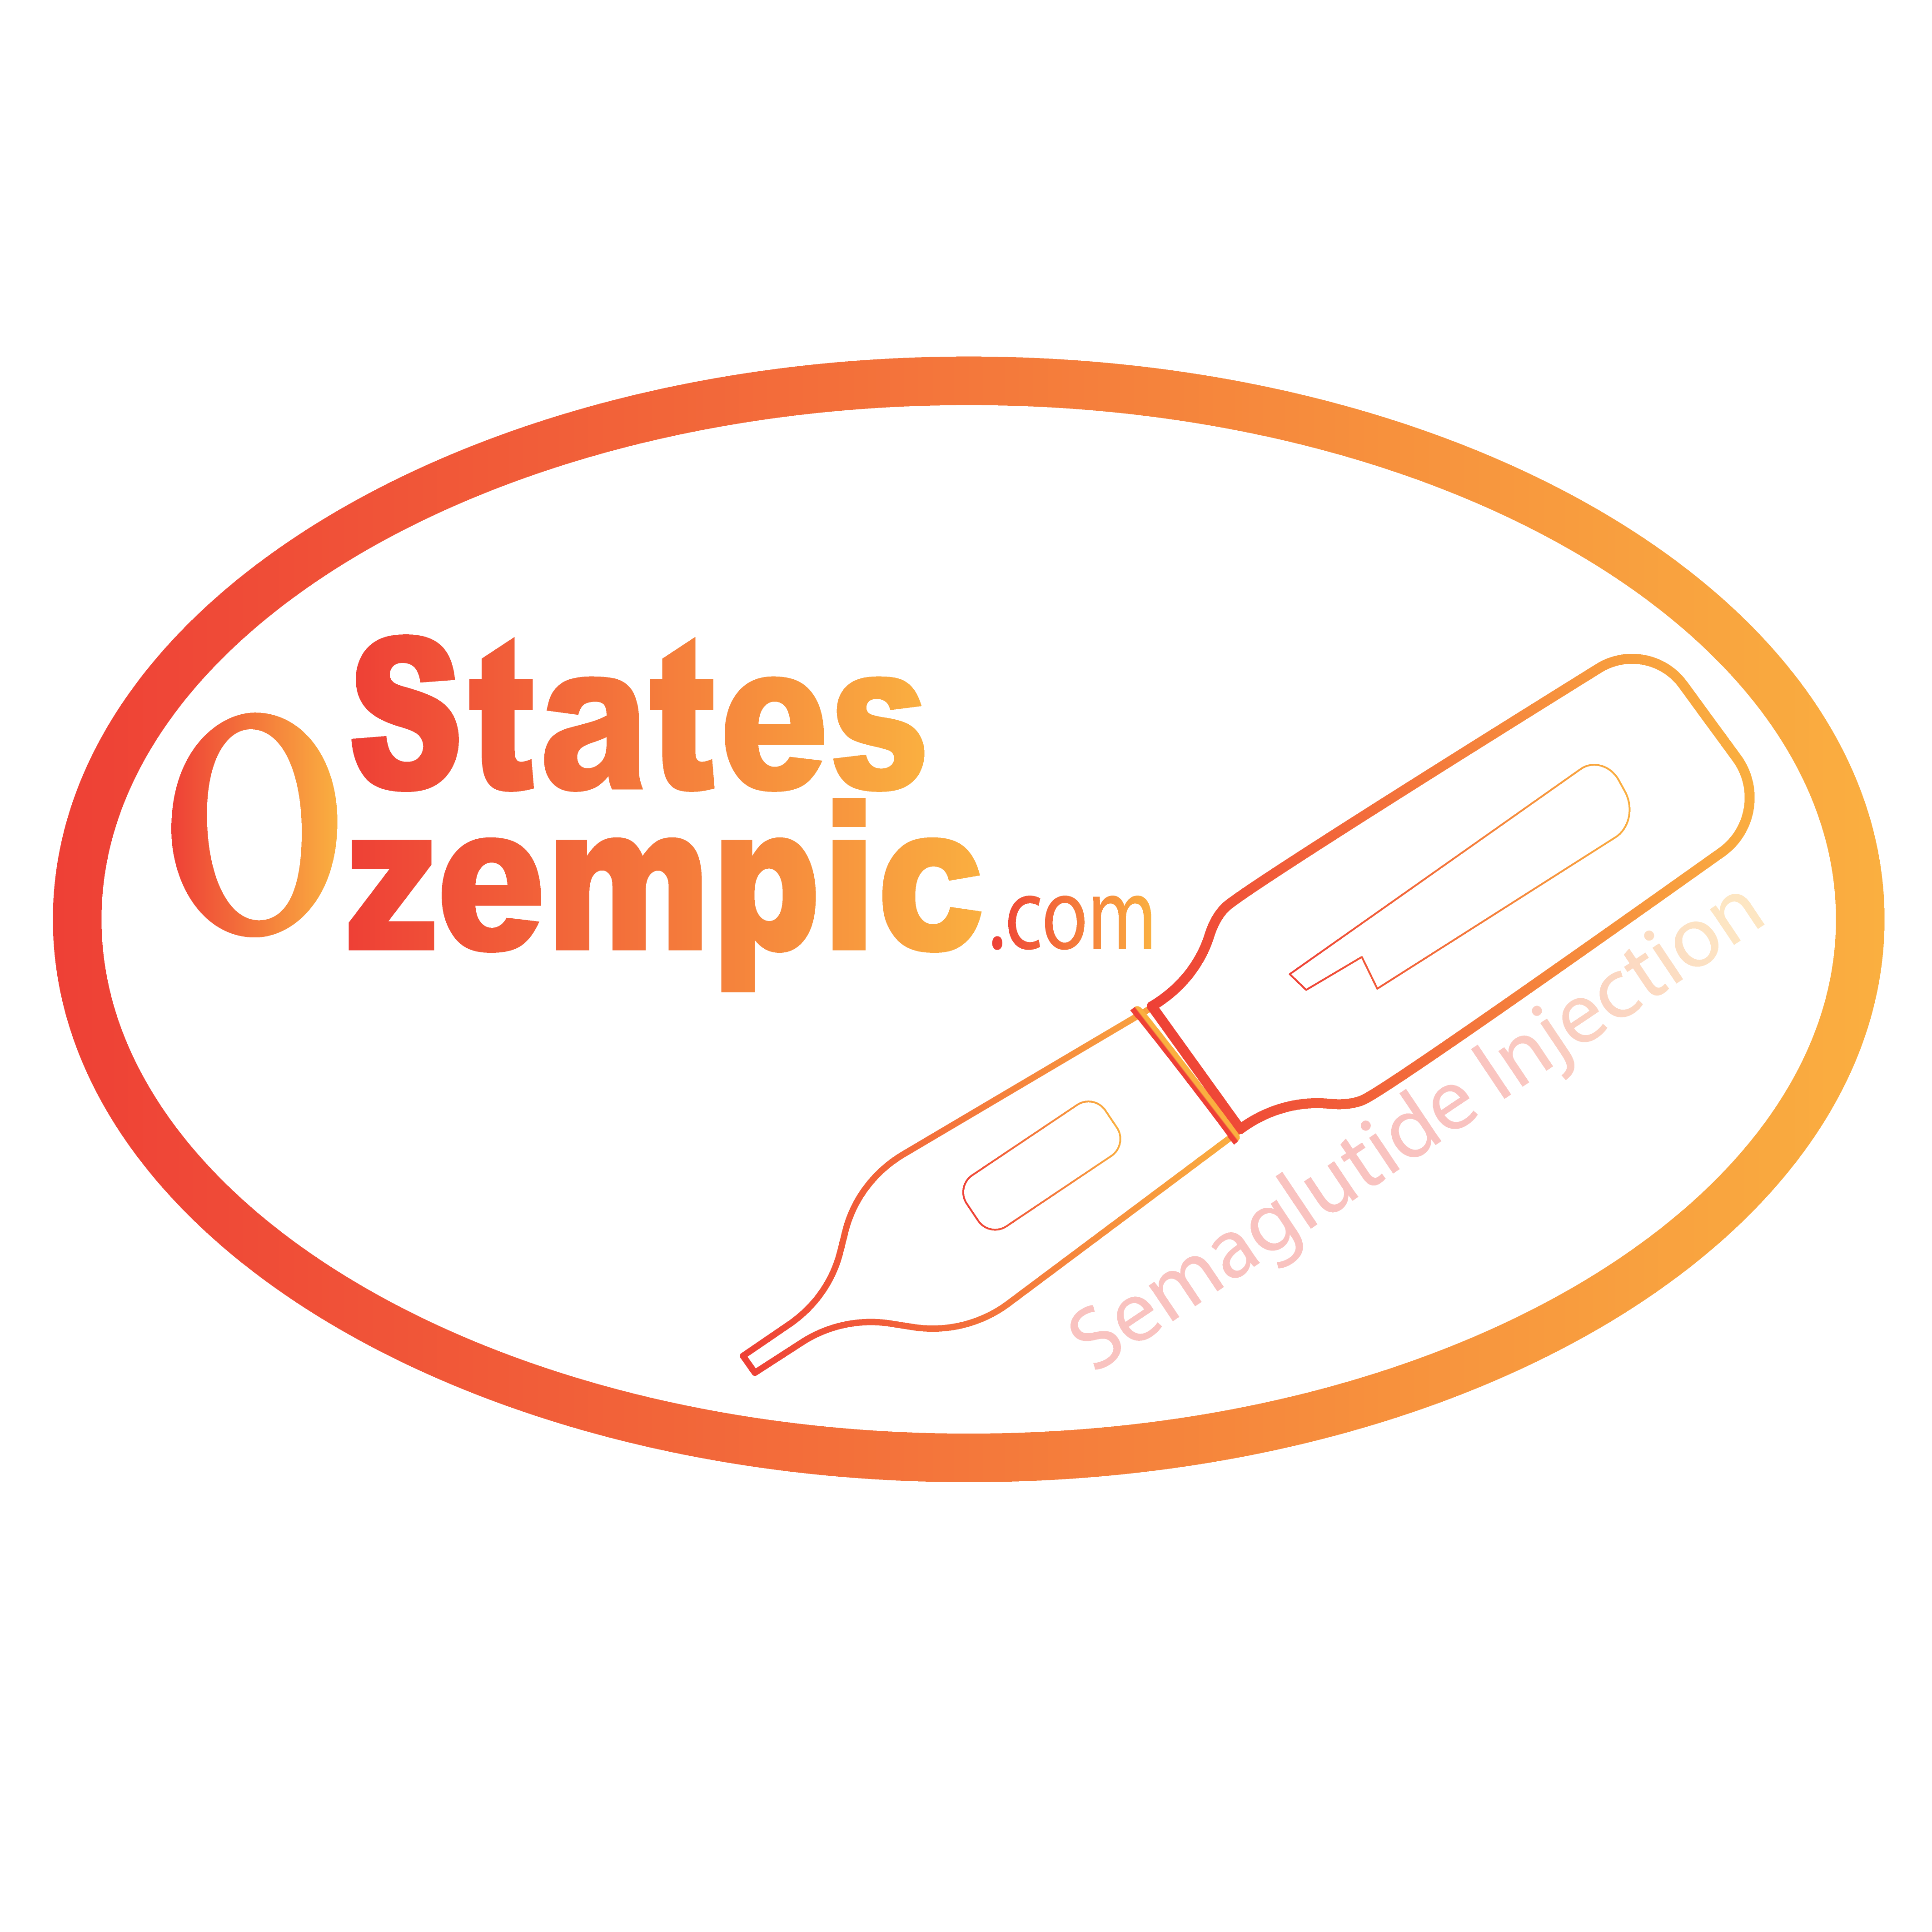 States Ozempic